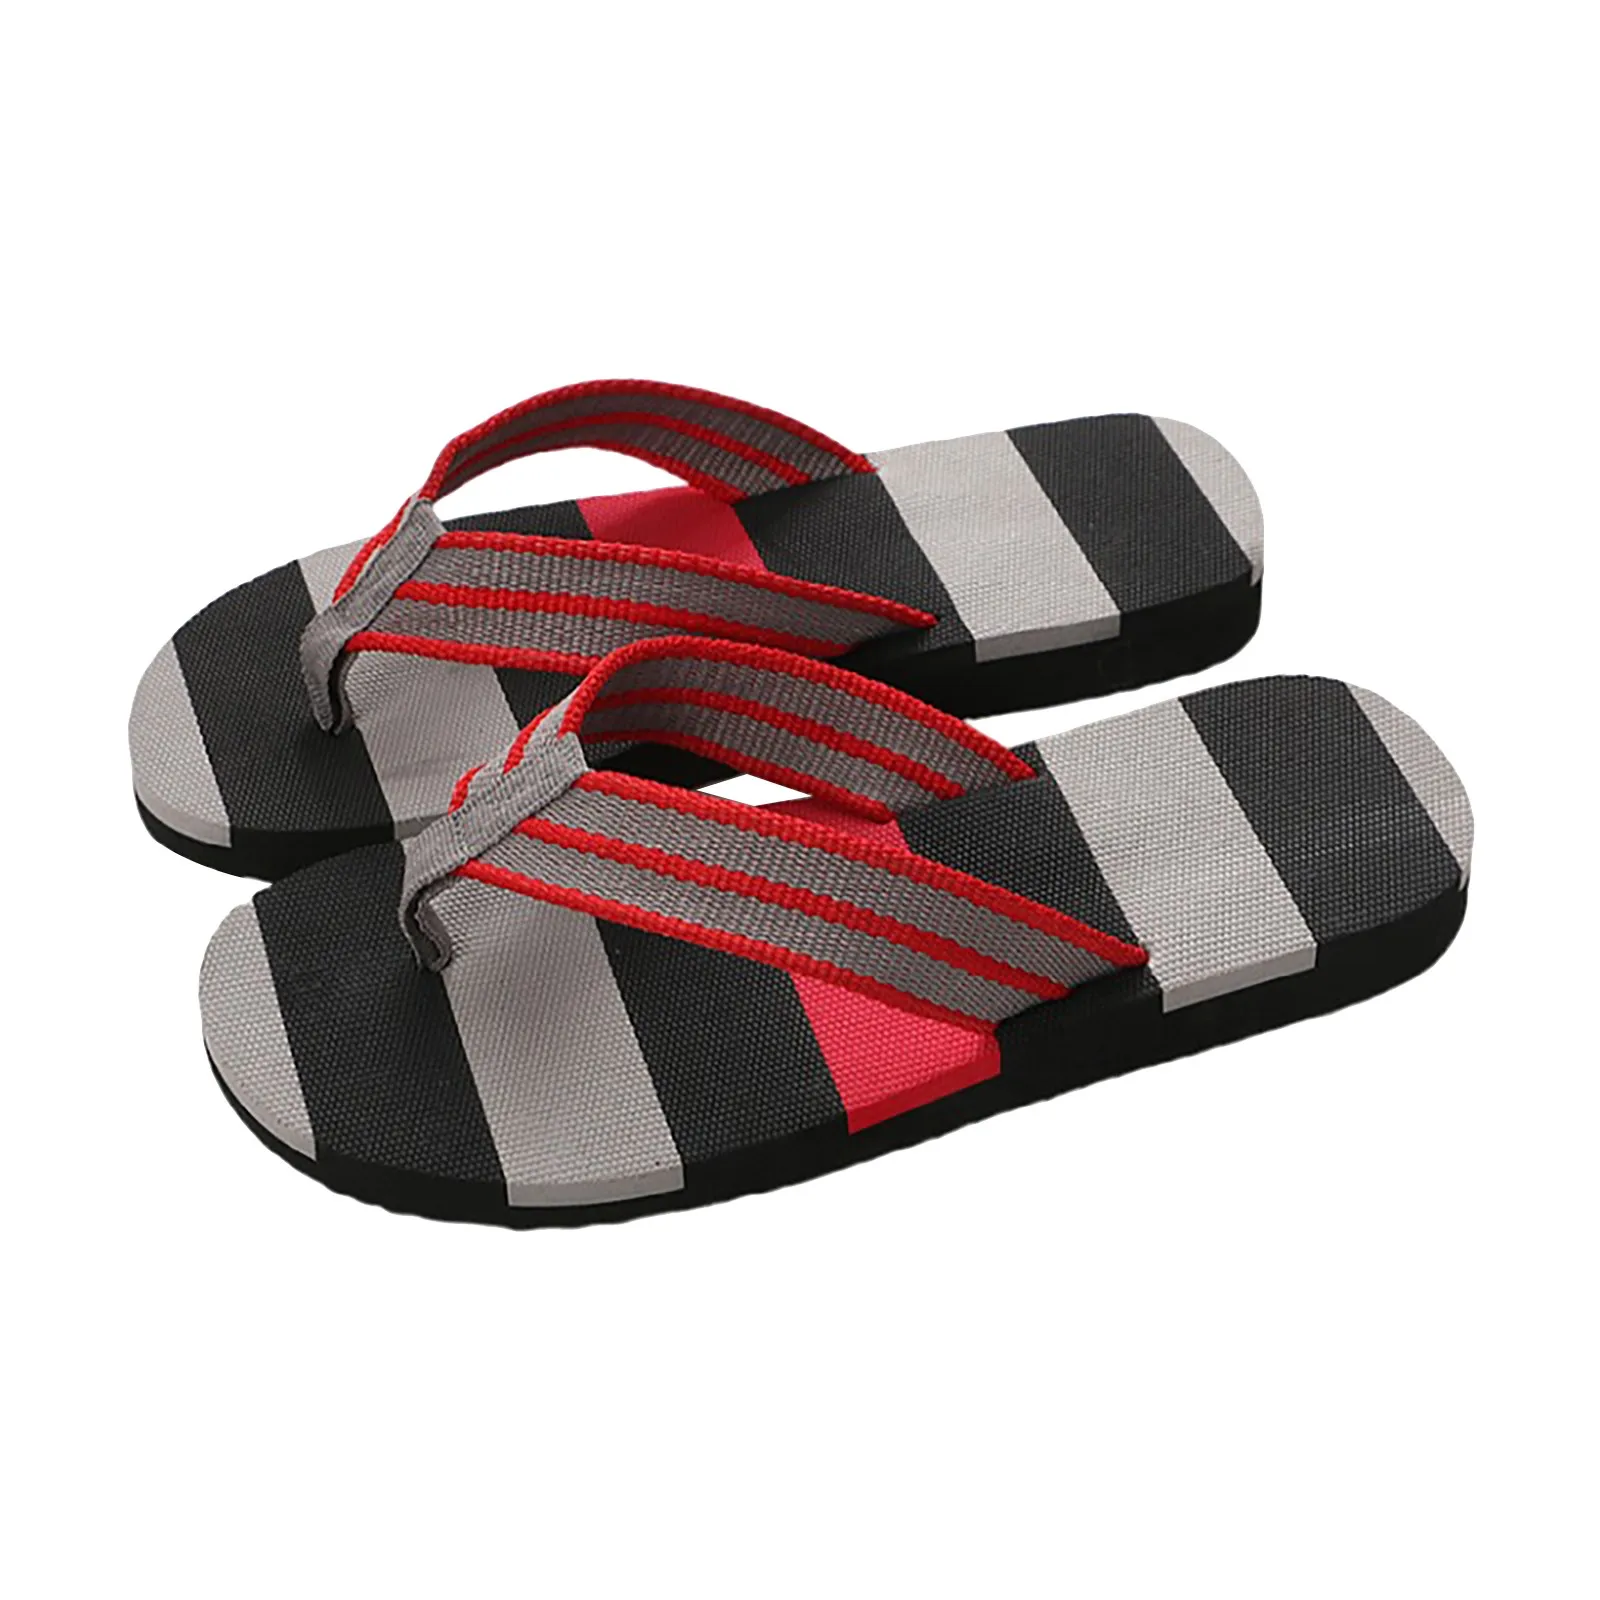 Sandalias antideslizantes para hombre, de interior exterior, zapatos de playa -